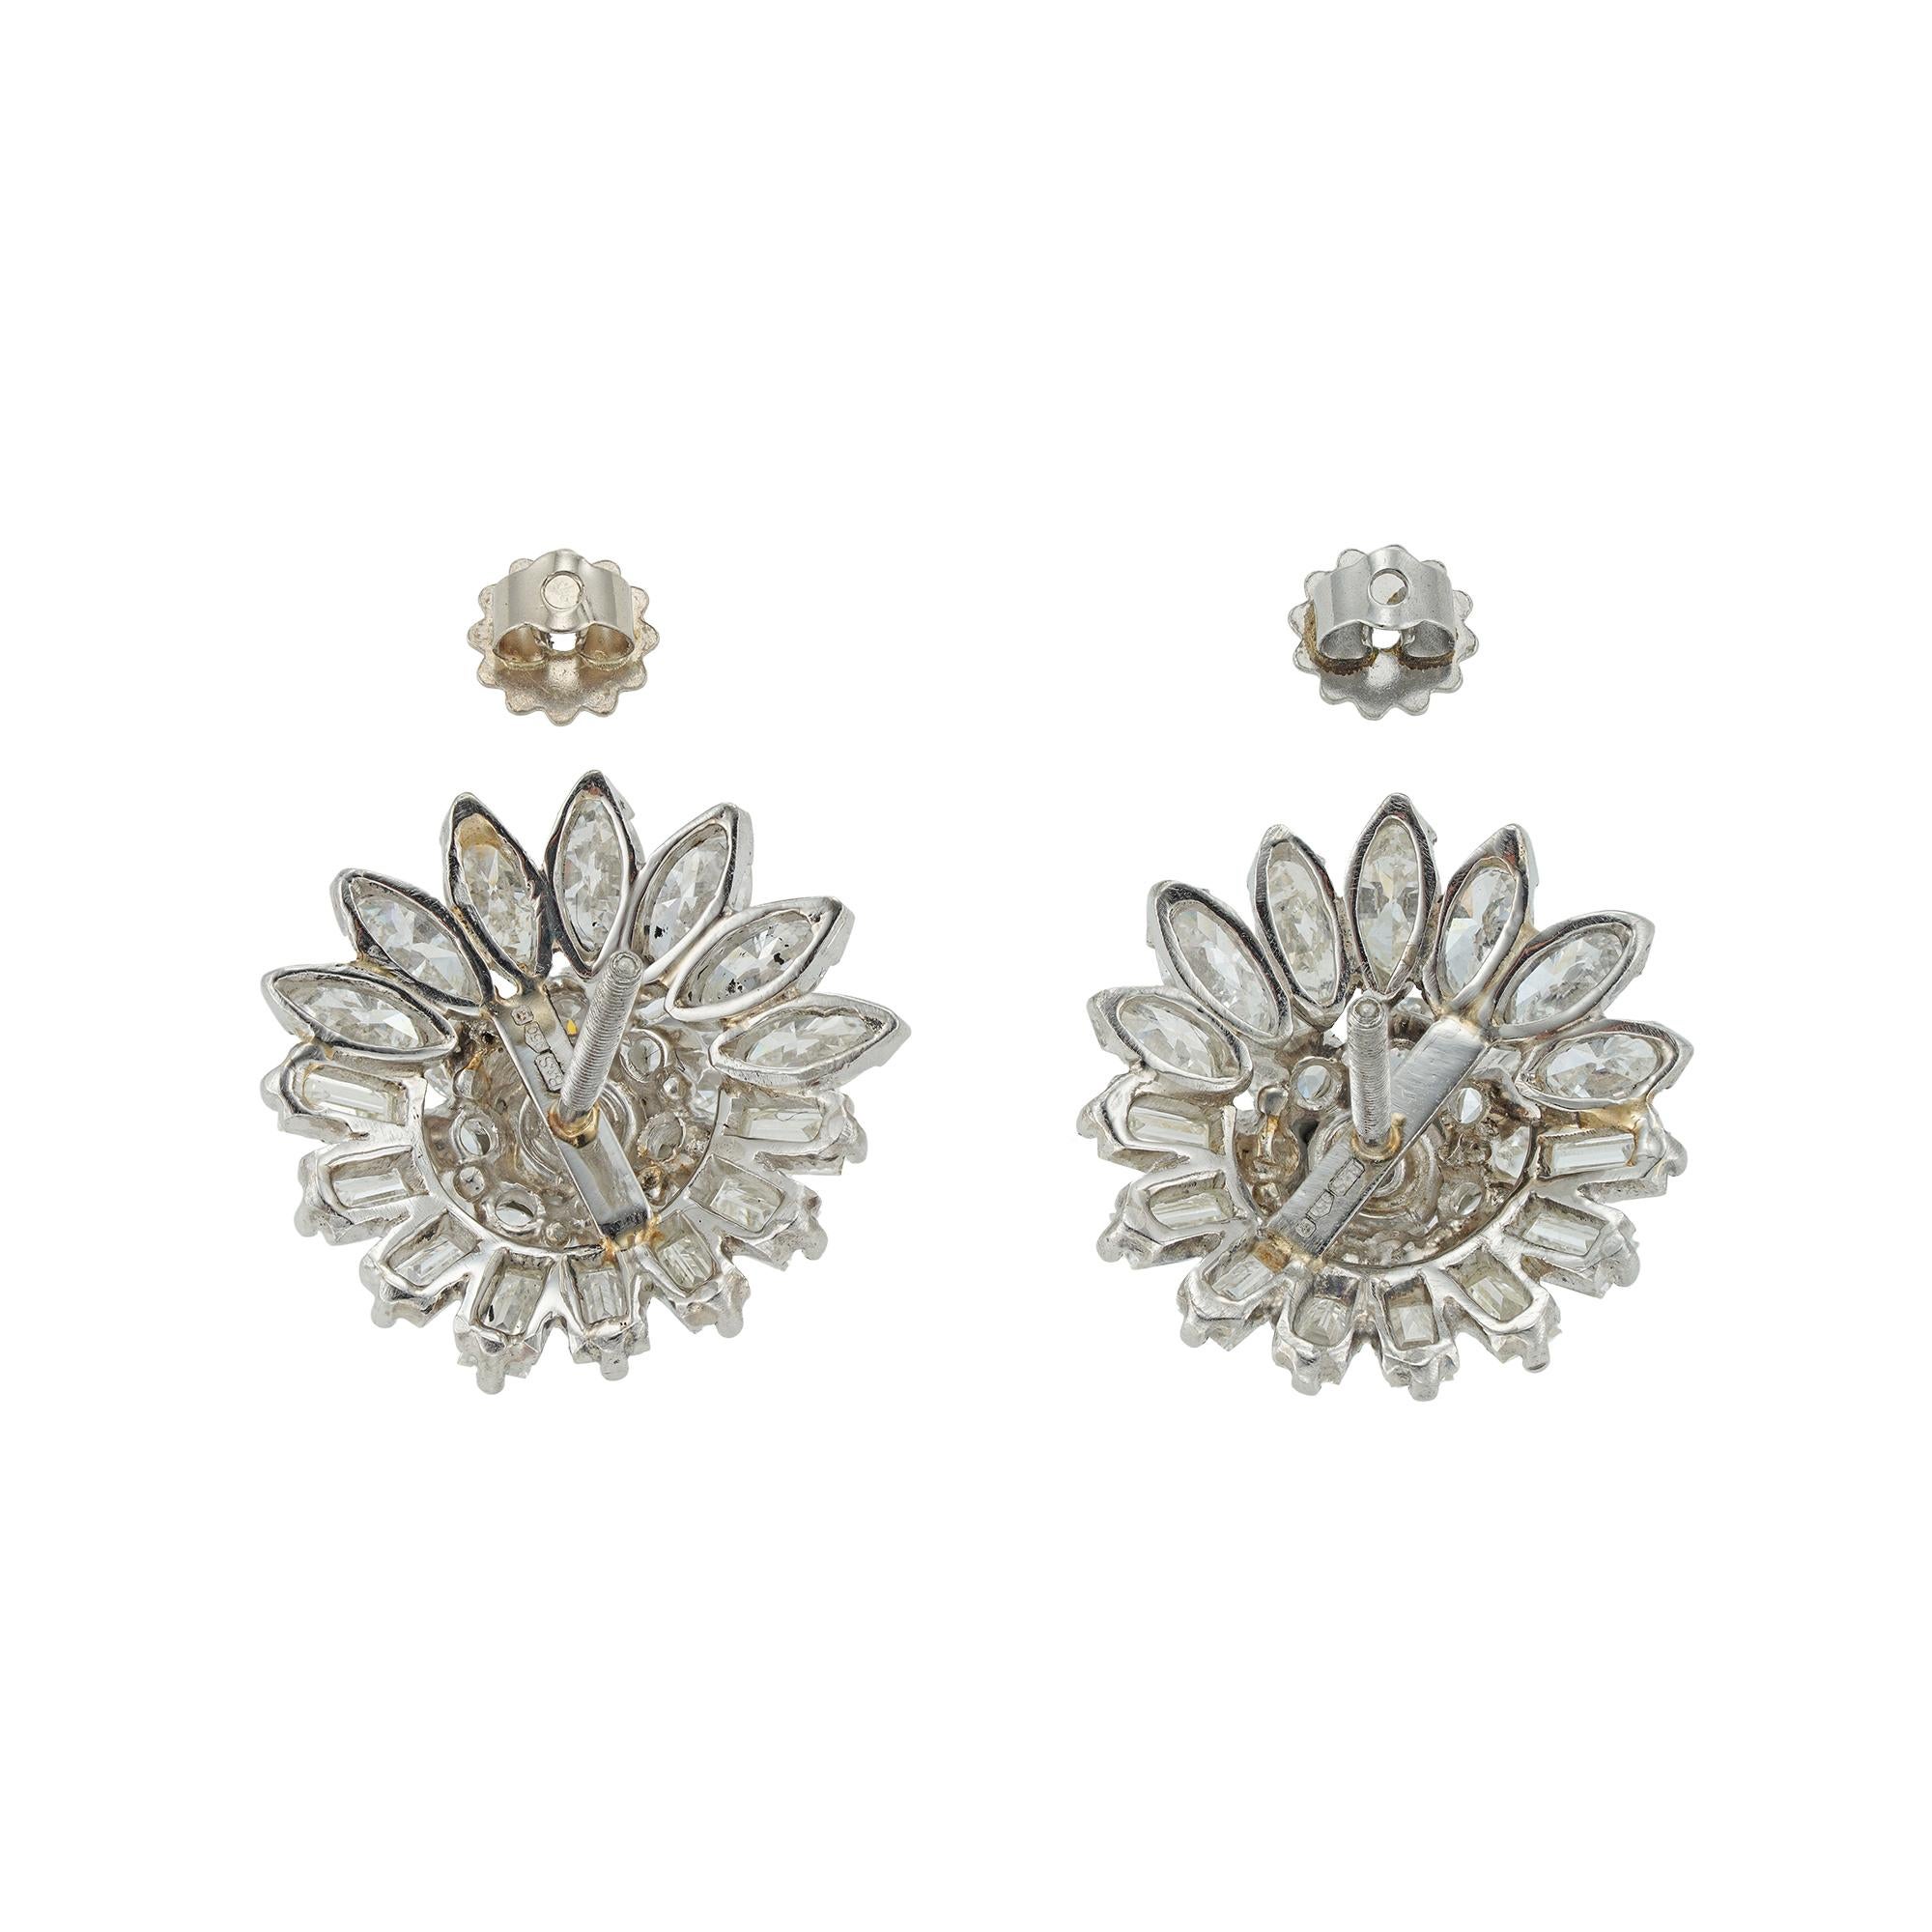 Modern Pair of Mid-20th Century Diamond Earrings